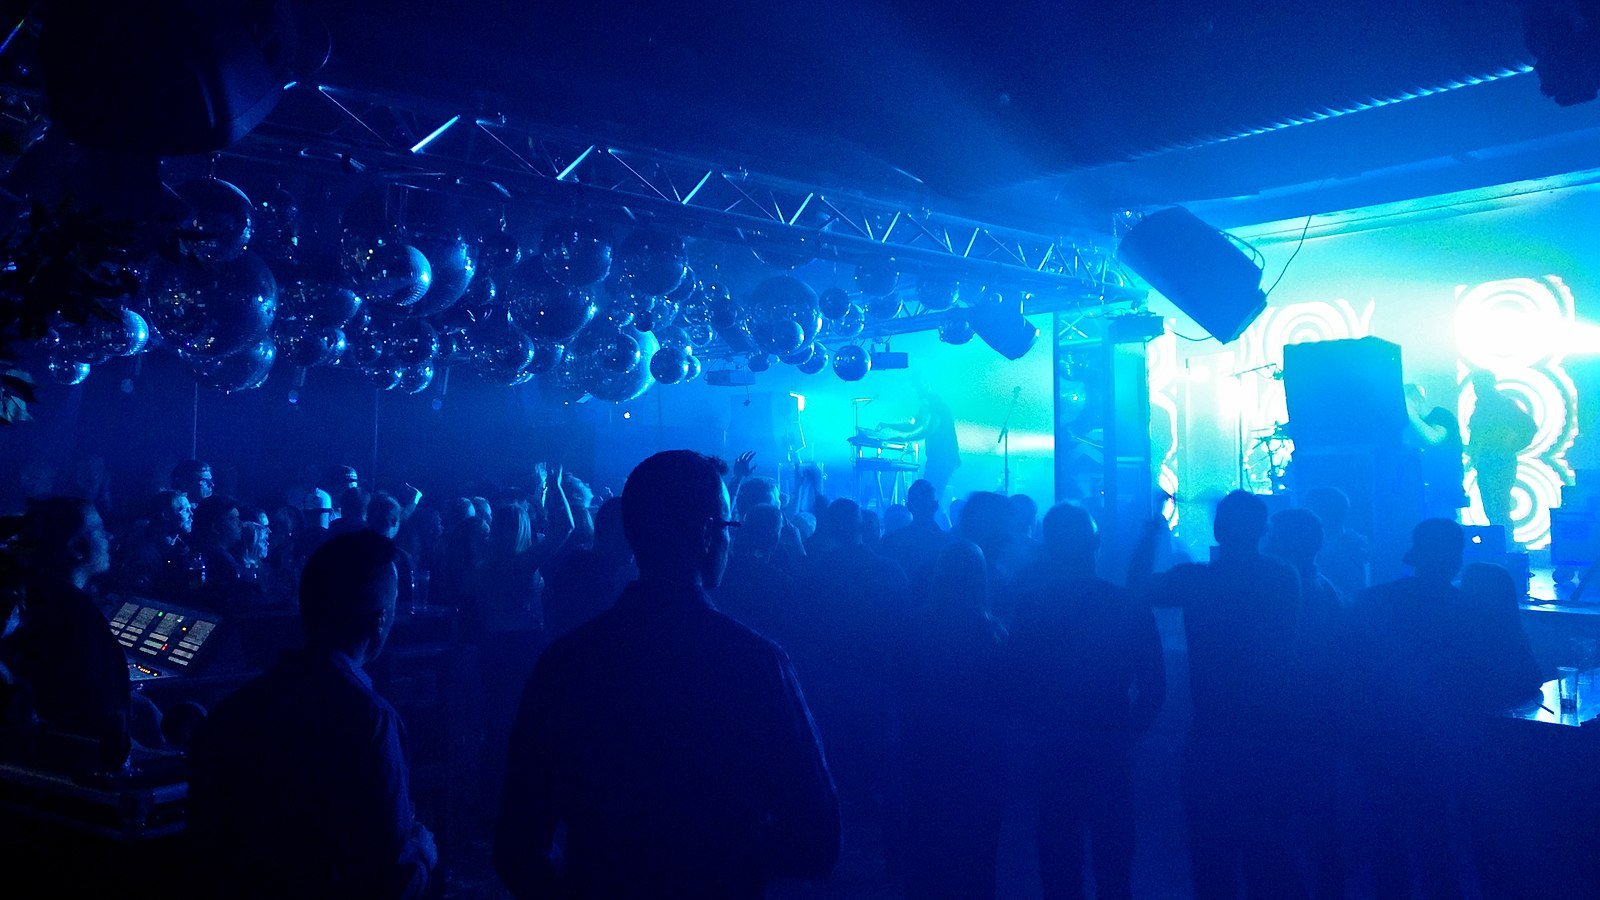 Nightclub lit by blue light